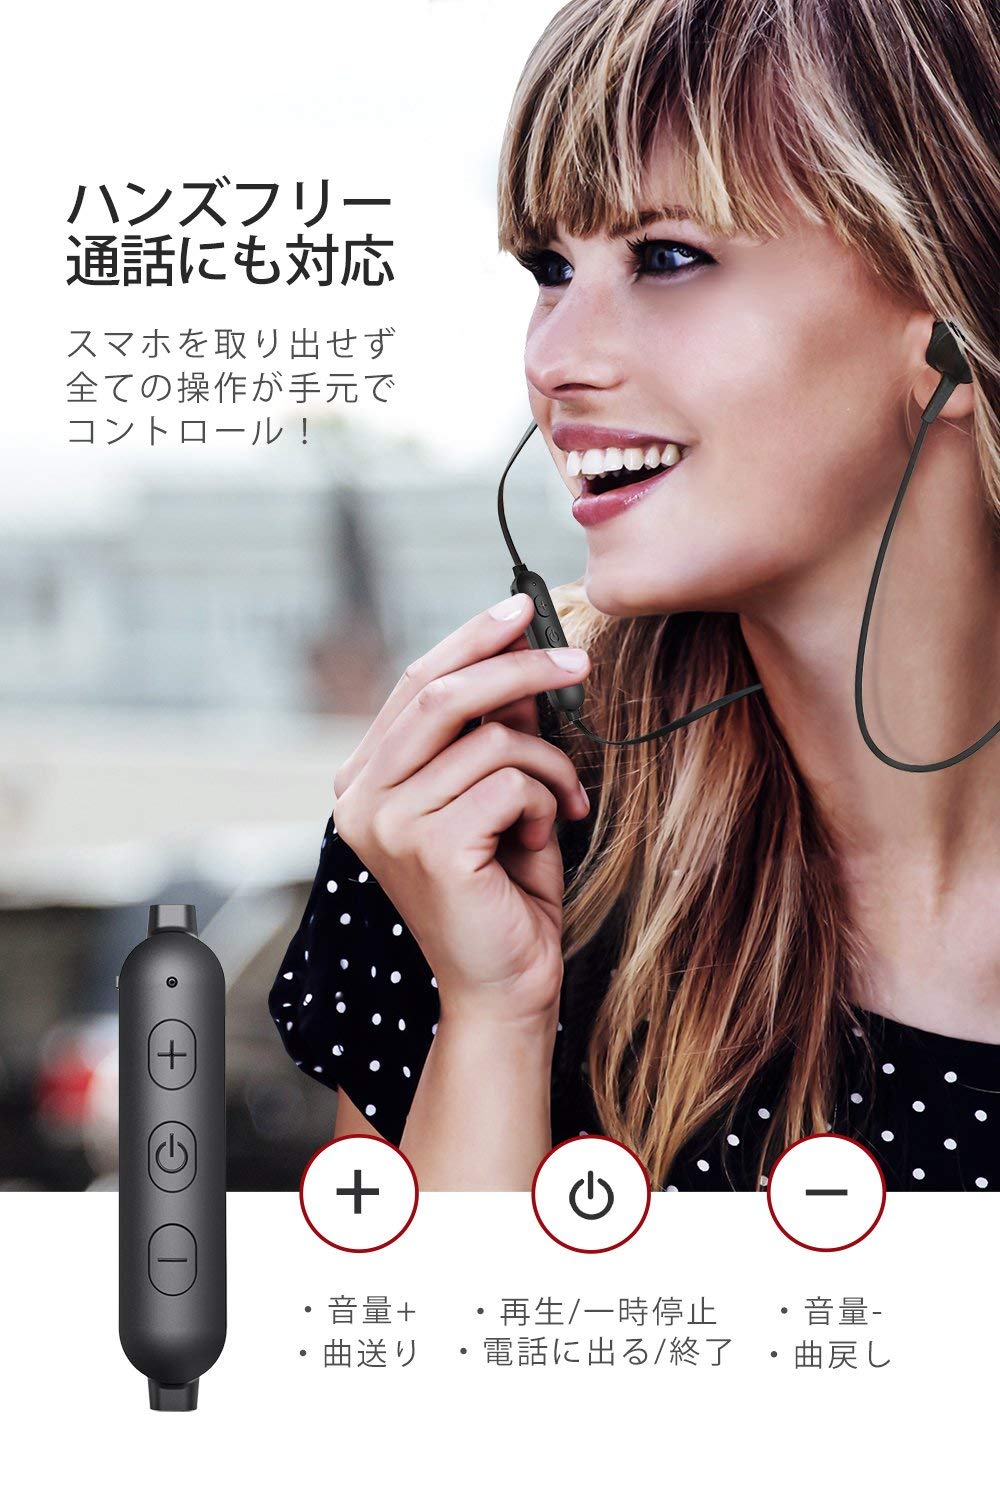 Bluetooth】ワイヤレスイヤホン TT-BH026 ピンク【Bluetooth 4.2/防水IPX4/8時間連続再生】 | TaoTronics  Japan